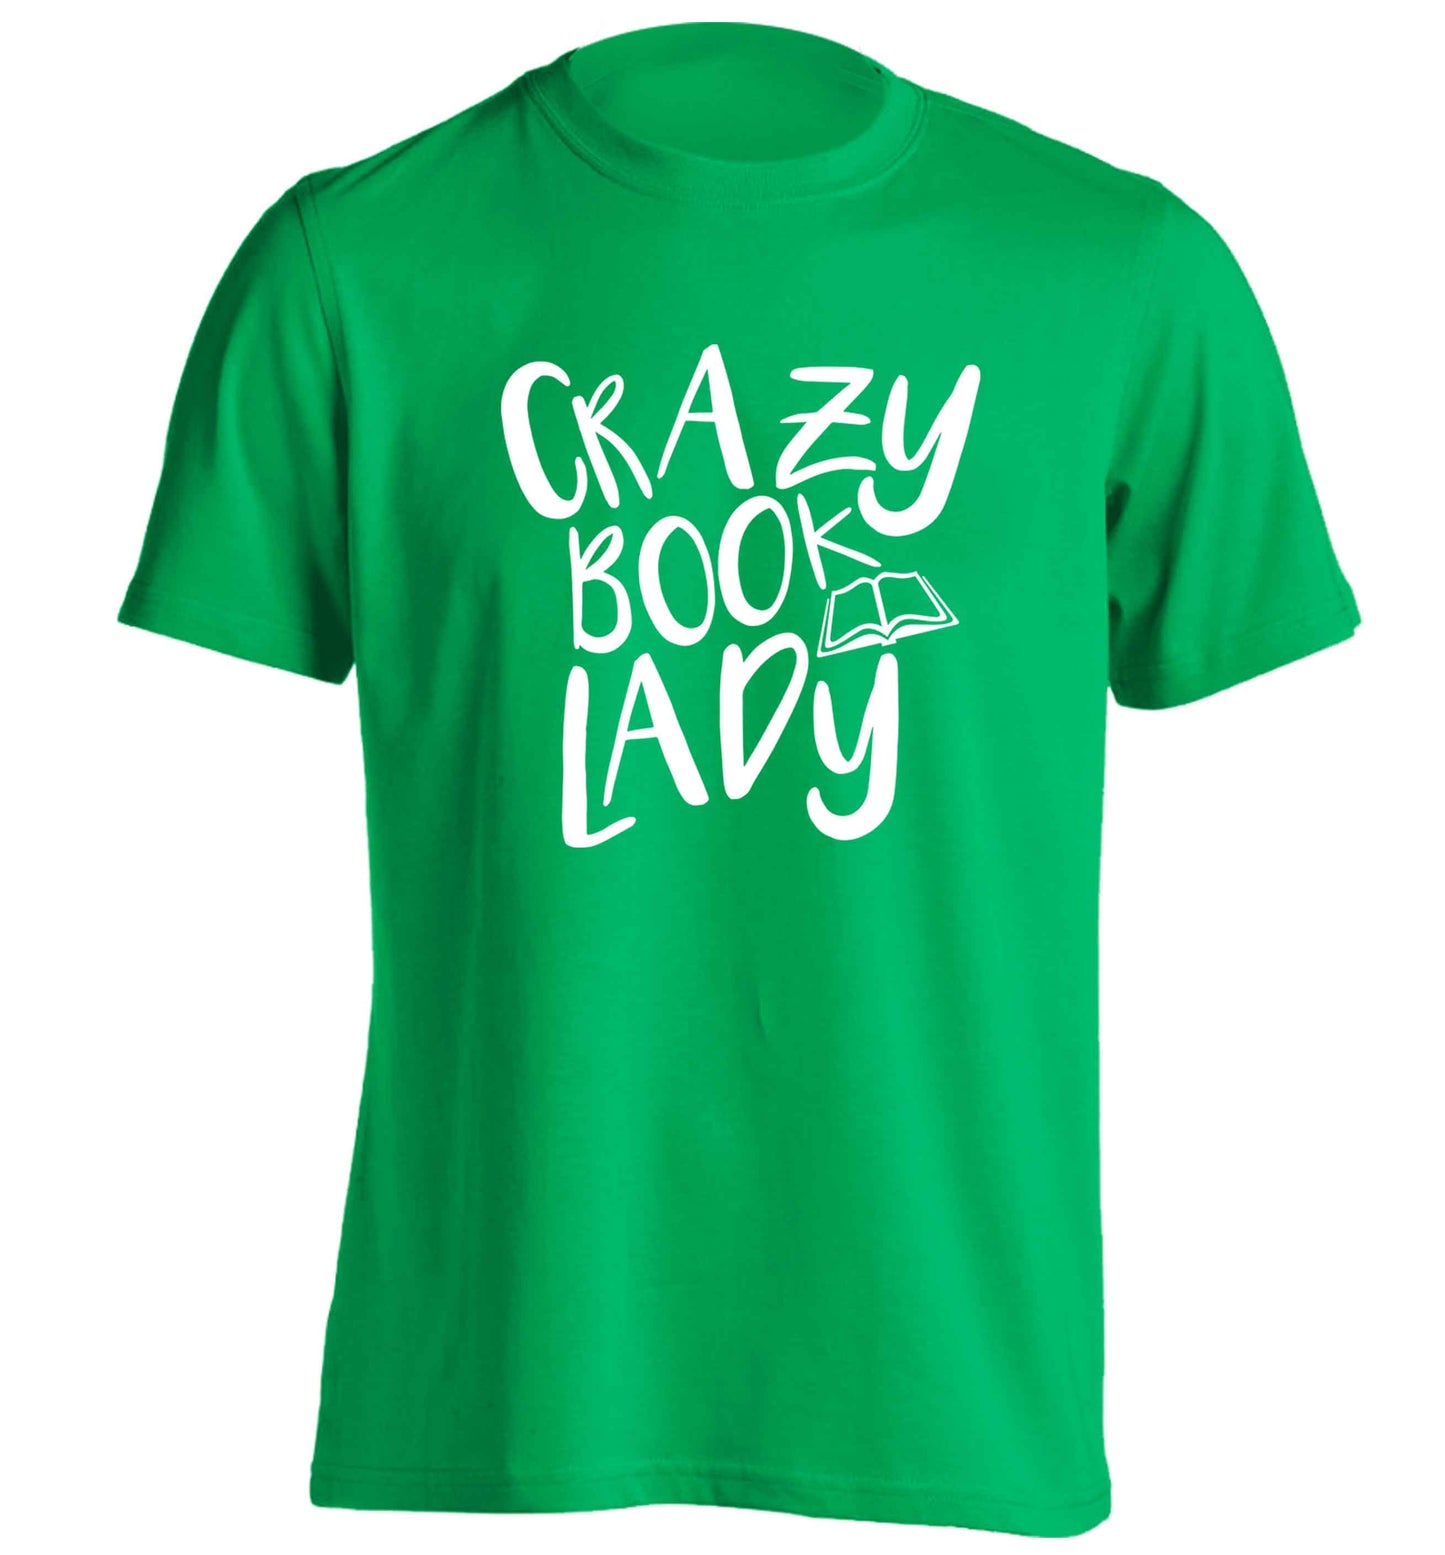 Crazy book lady adults unisex green Tshirt 2XL